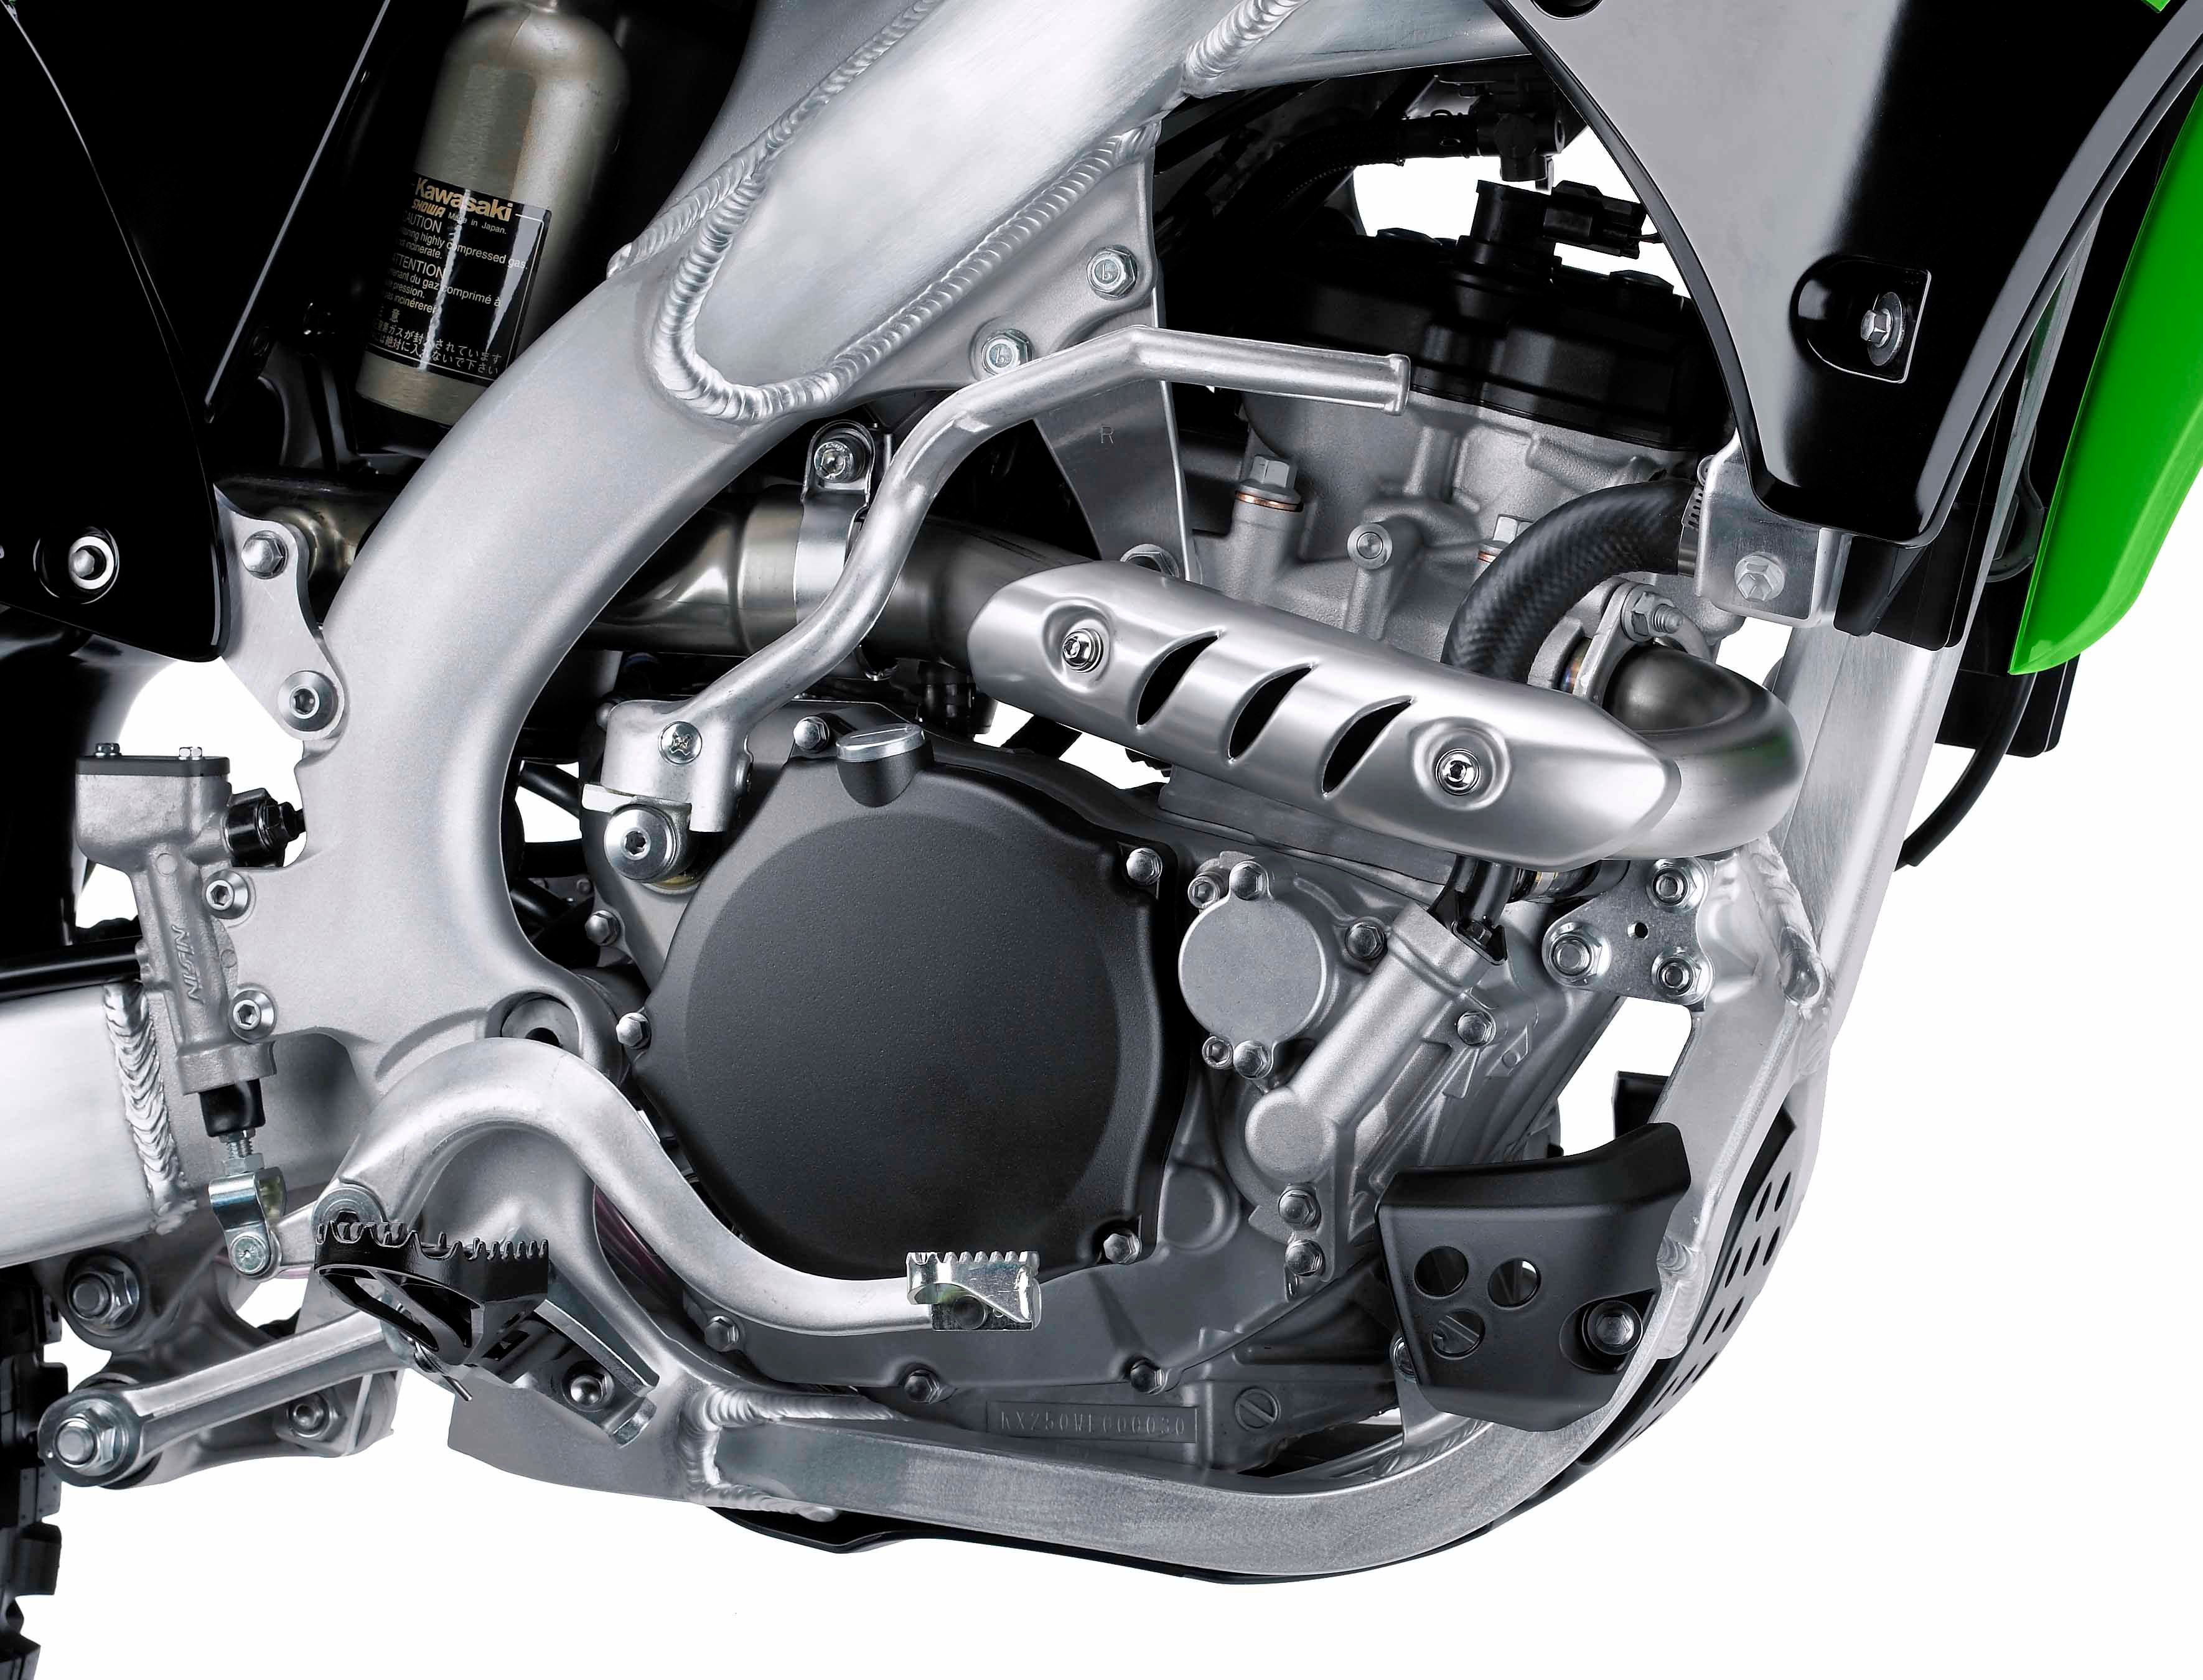  2009 Kawasaki KX250F Engine